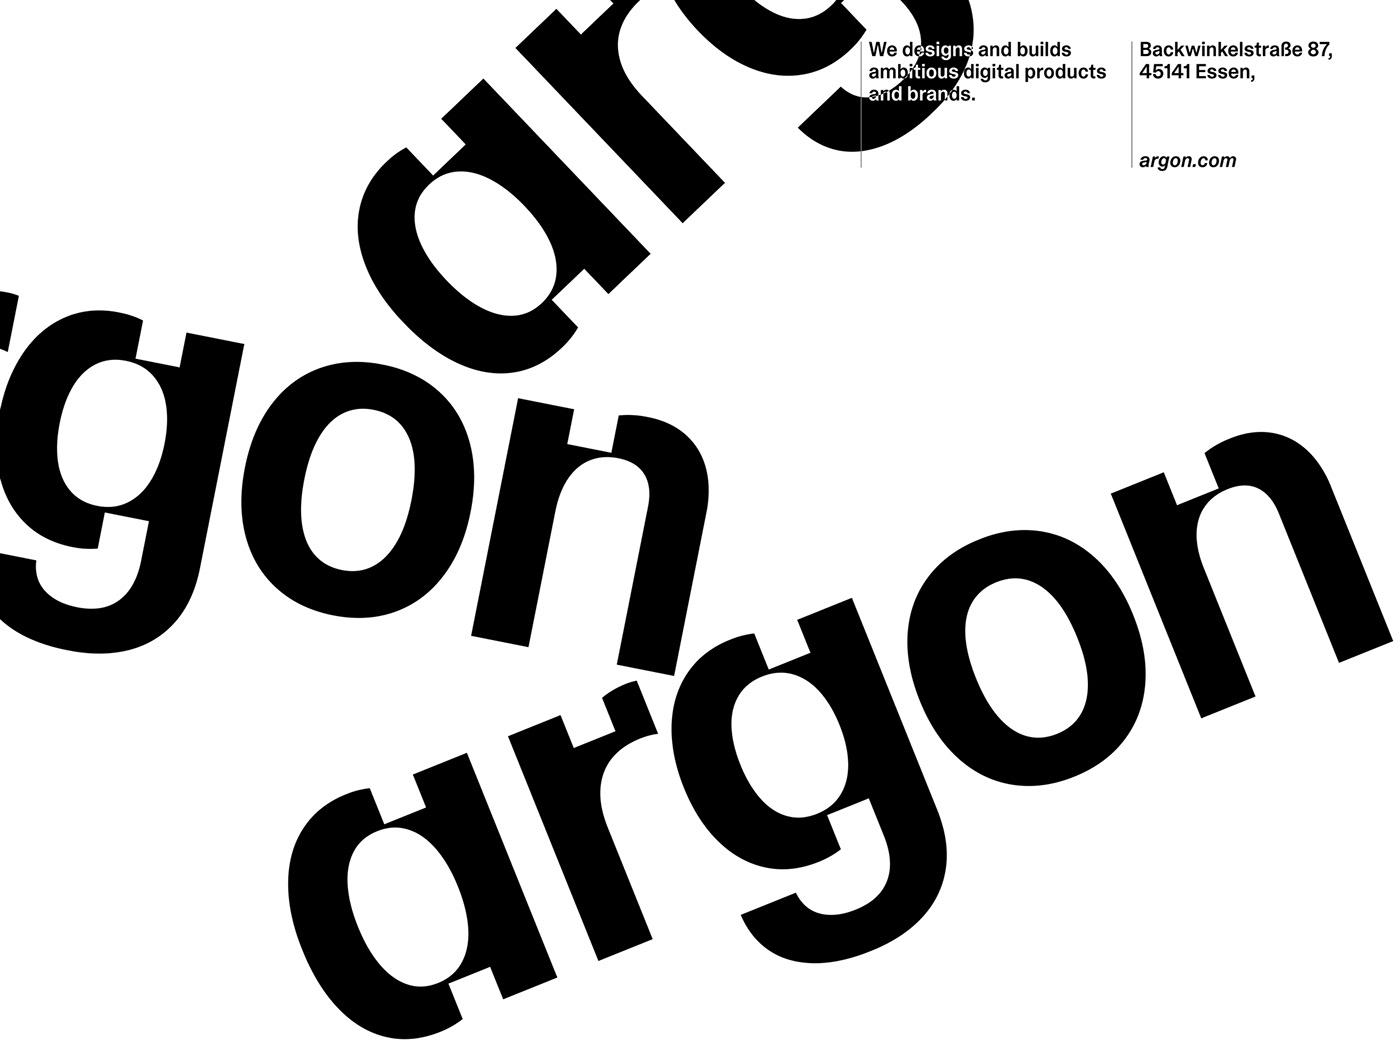 Argon极简风格品牌视觉识别设计